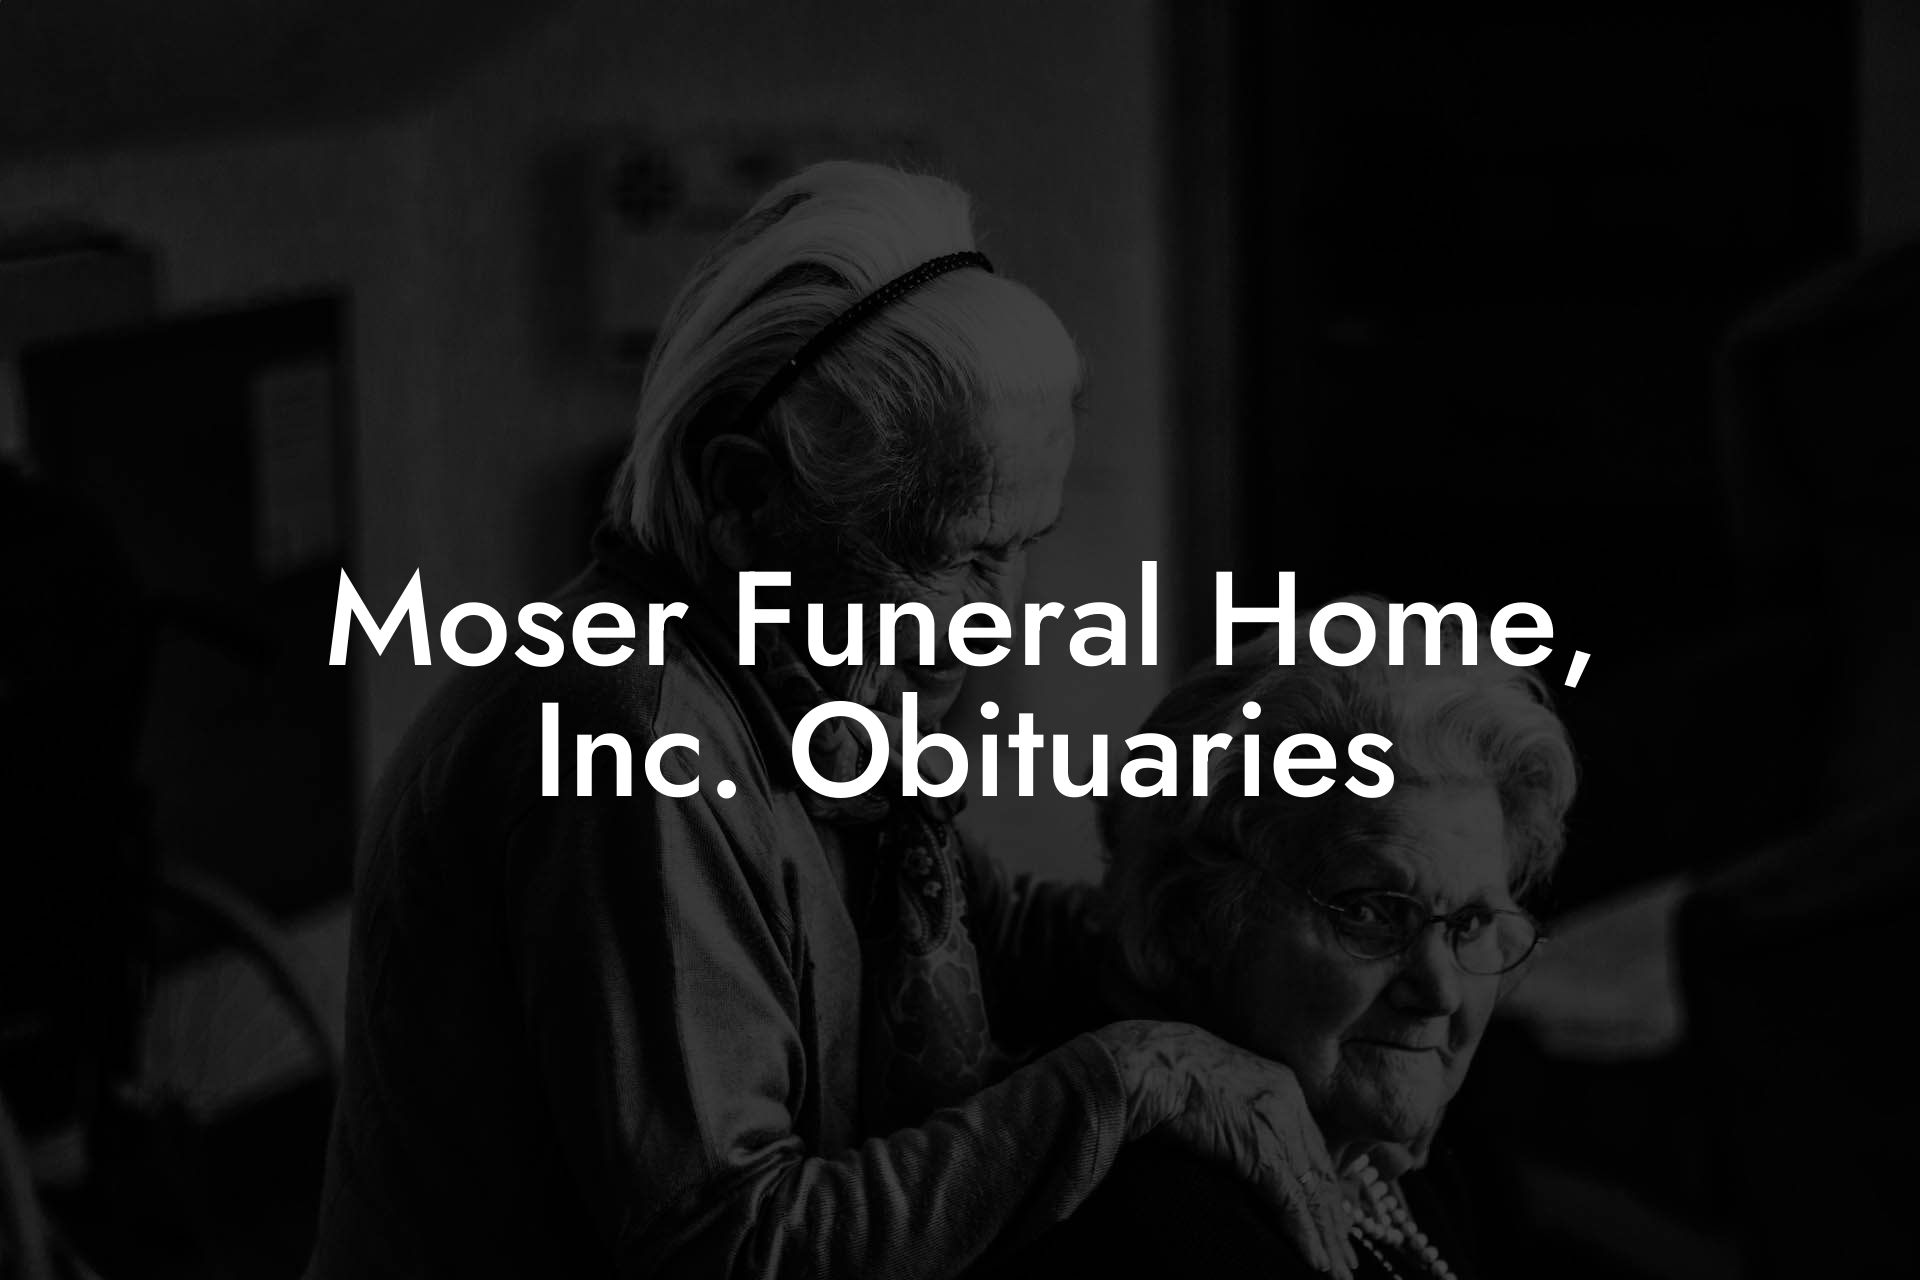 Moser Funeral Home, Inc. Obituaries